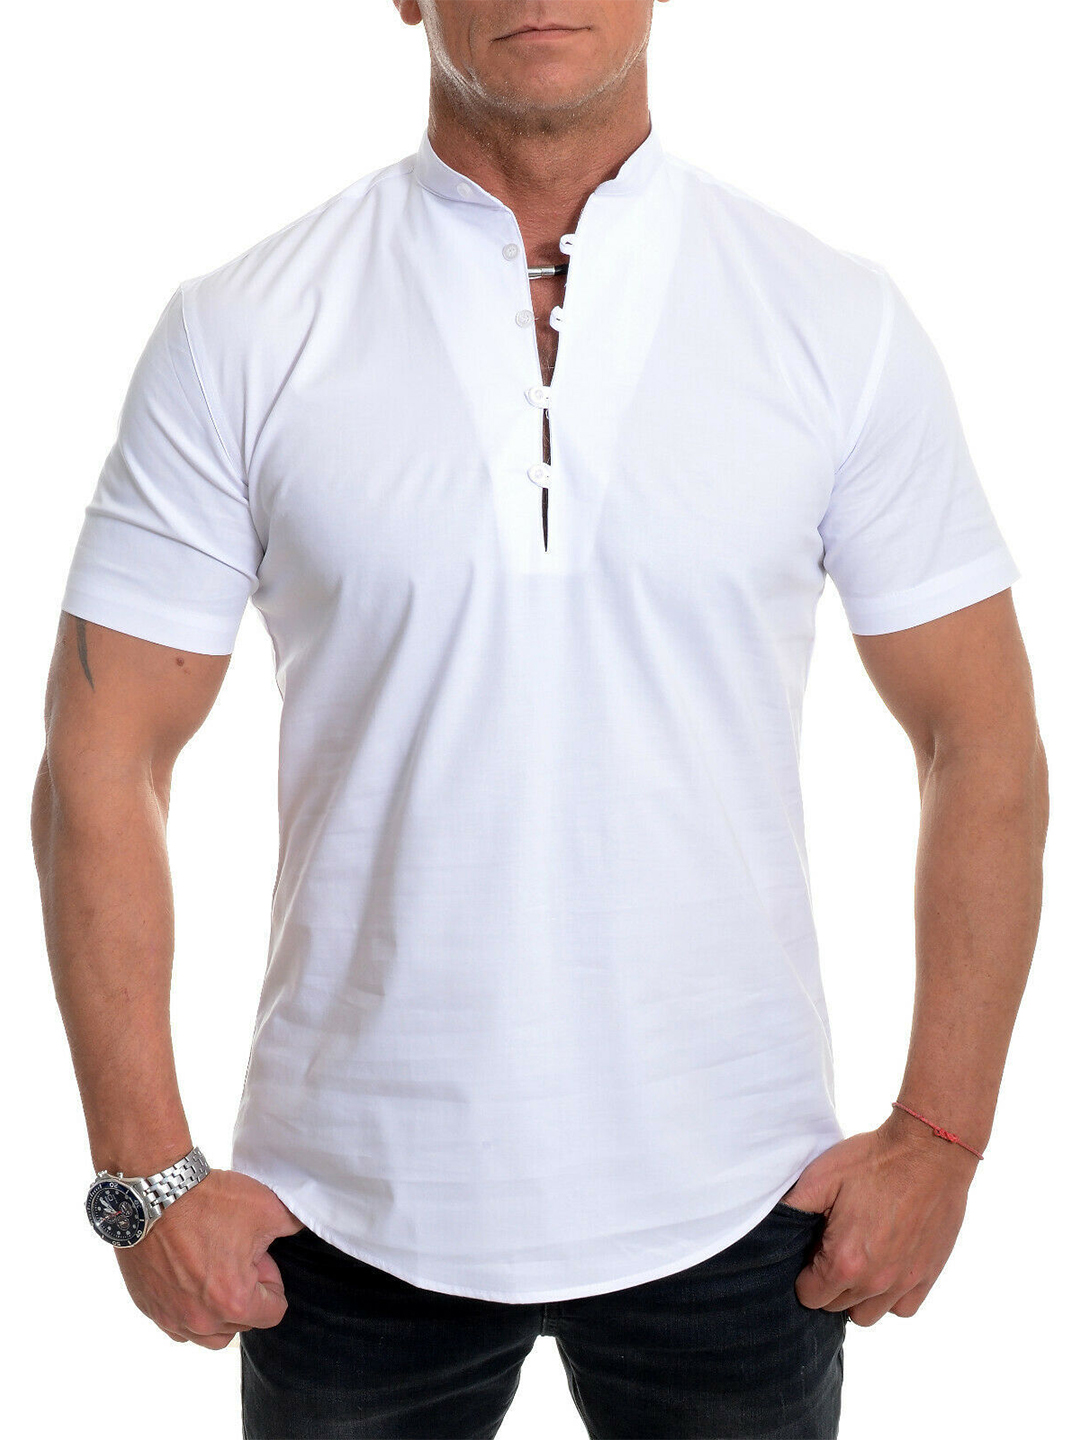 Men's Short Sleeved Casual Shirt